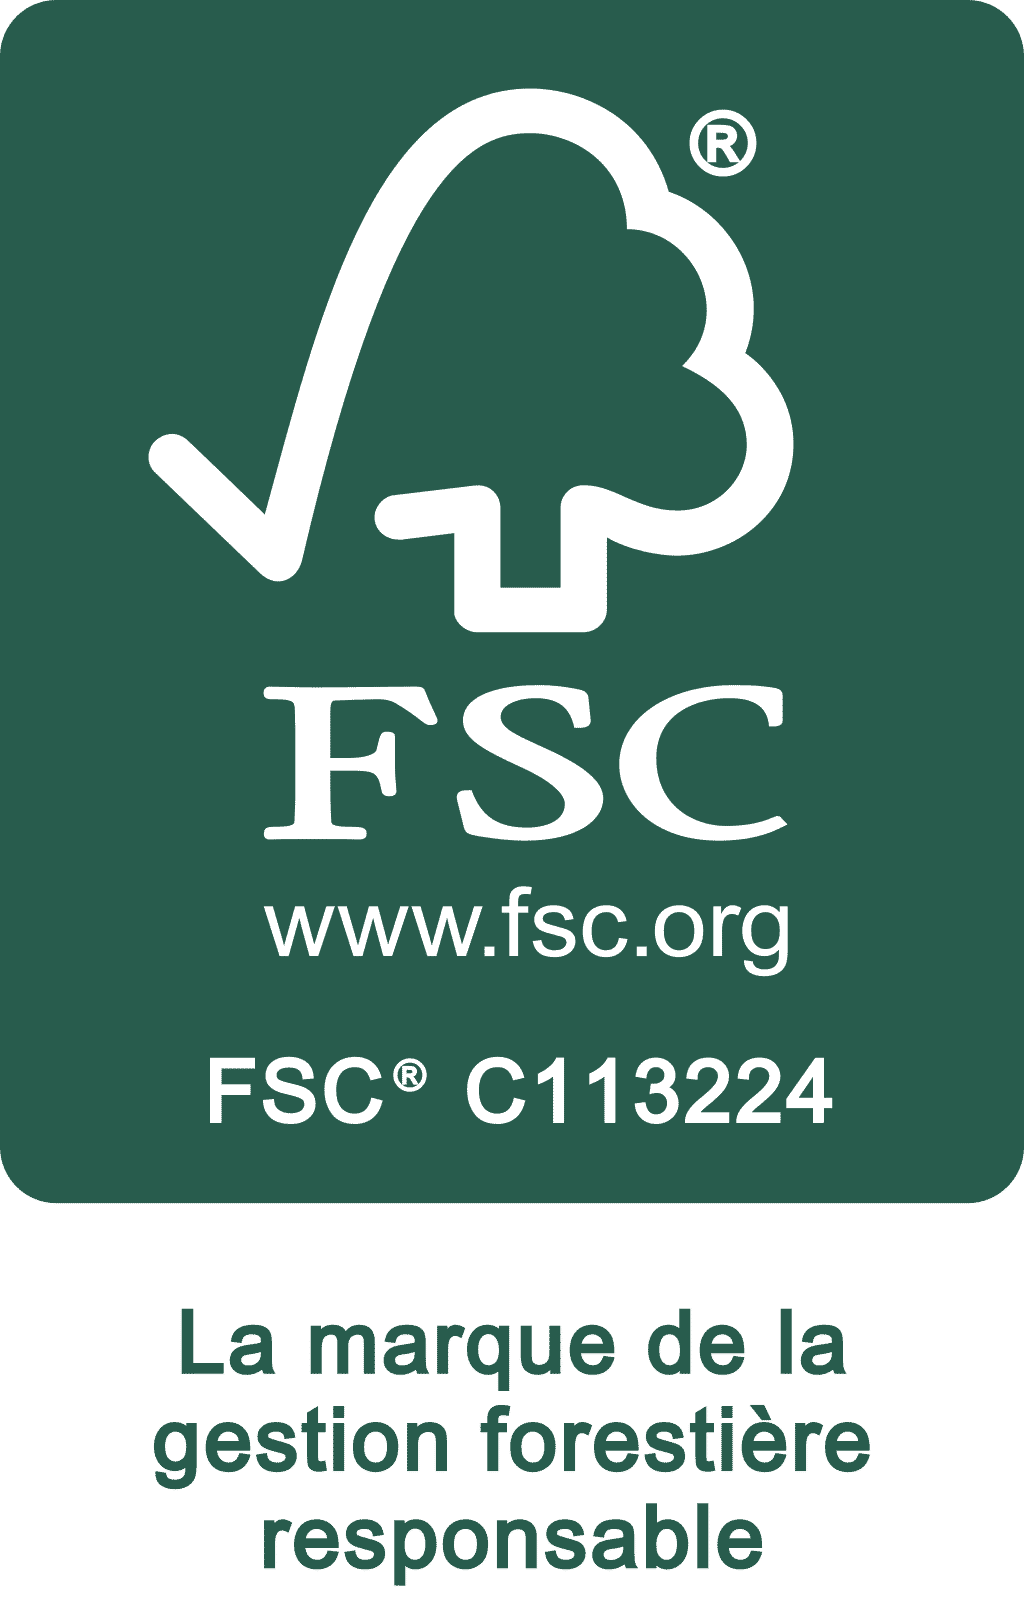 logo fsc vertical